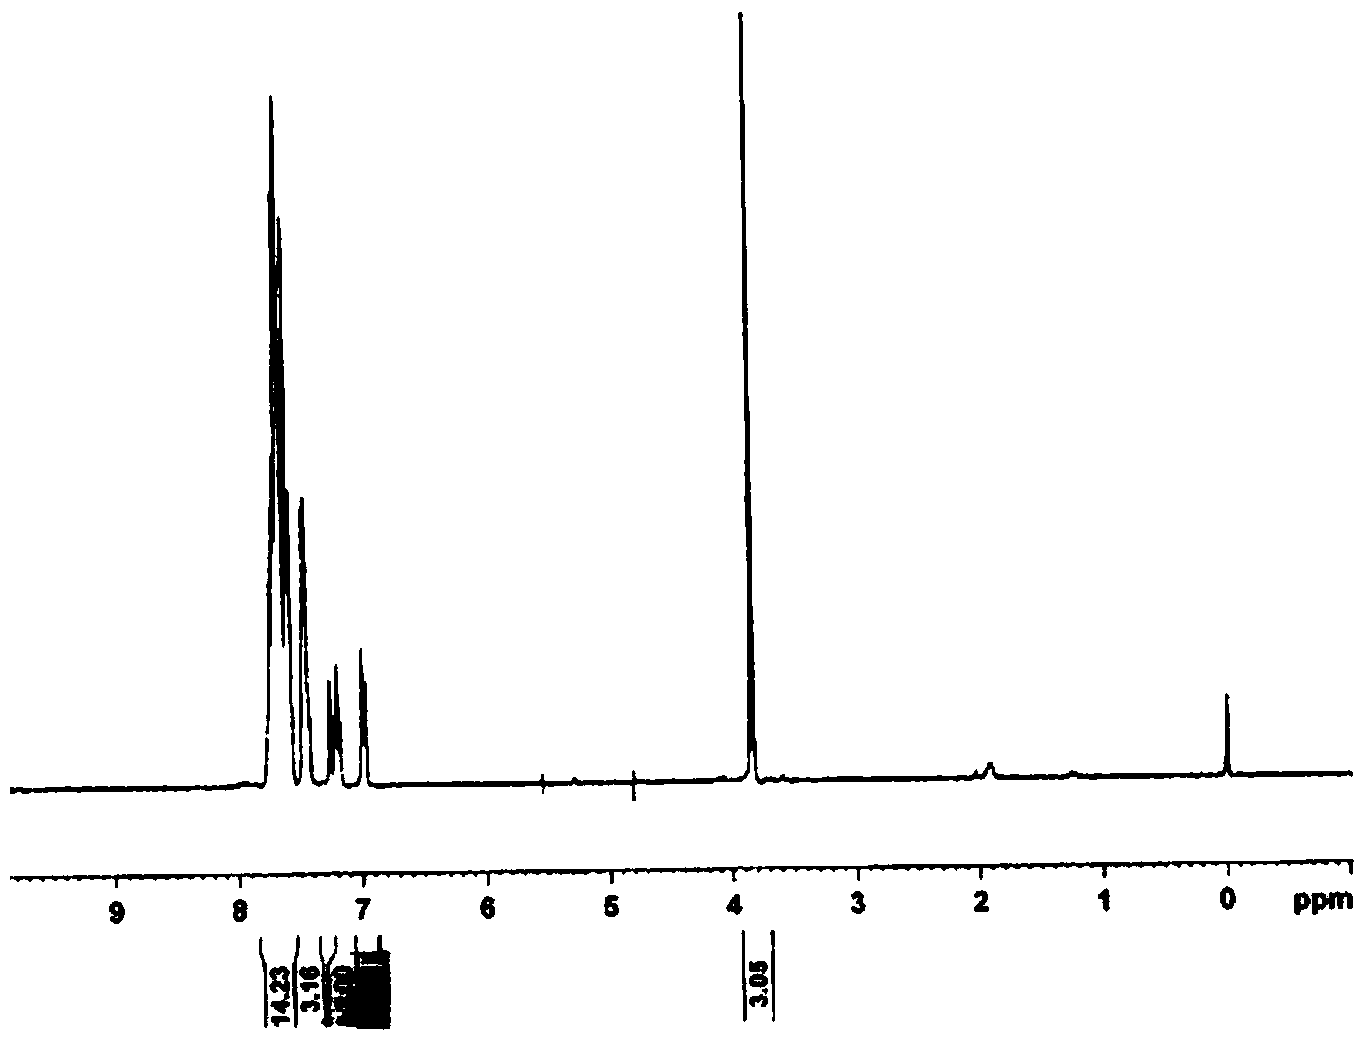 Triaryl sulfonium salt containing 1-methyl-2-phenyl indole skeleton and preparation method thereof